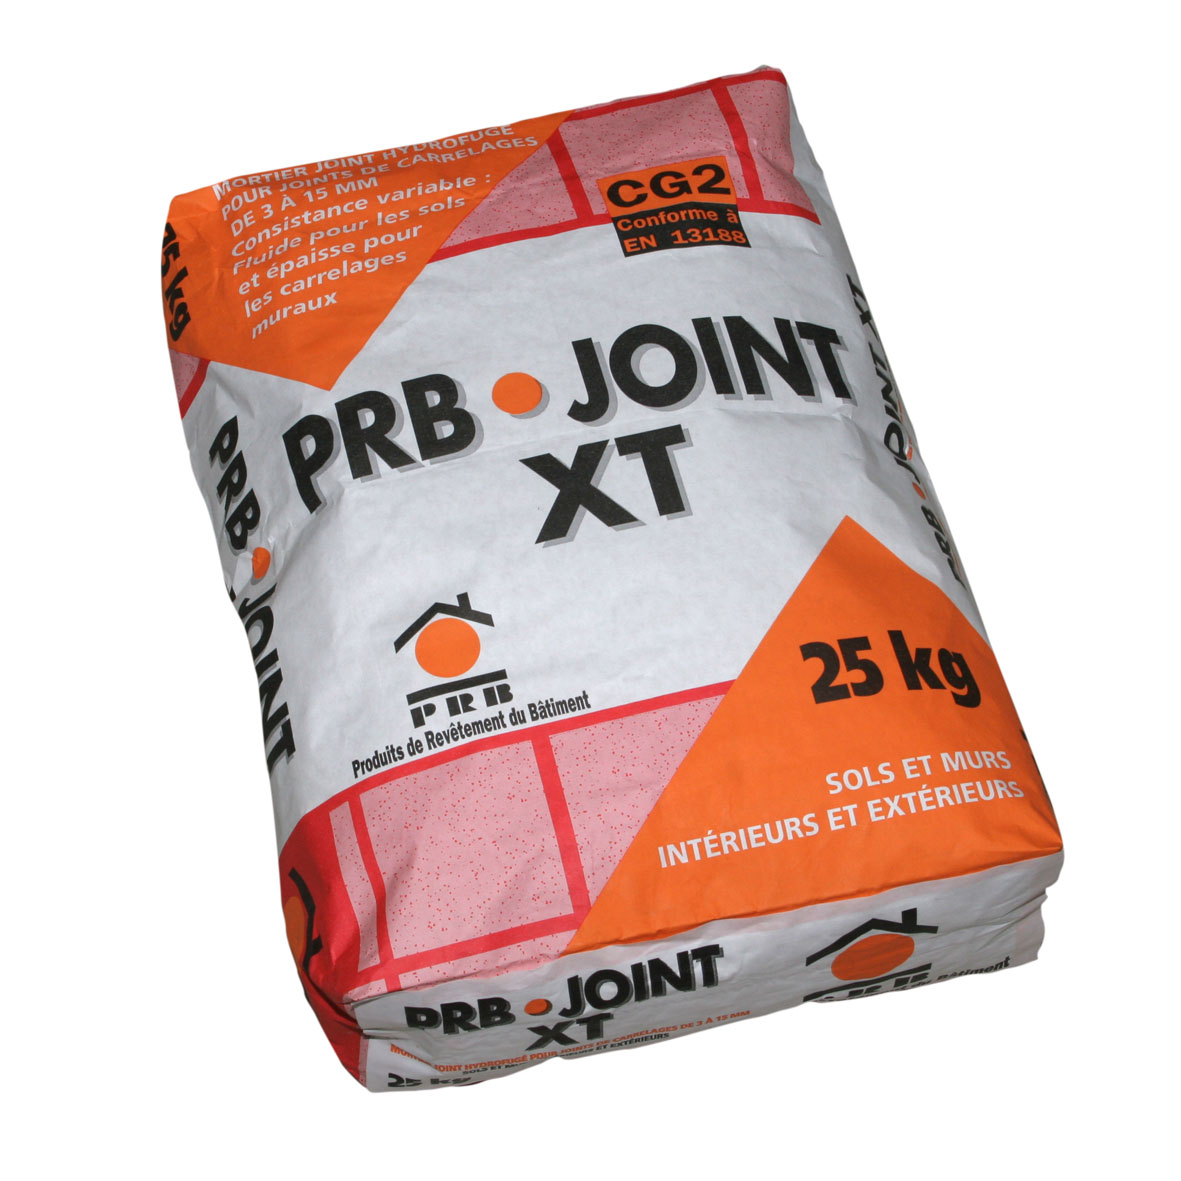 joint-carrelage-prb-joint-xt-25kg-sac-tibet-0